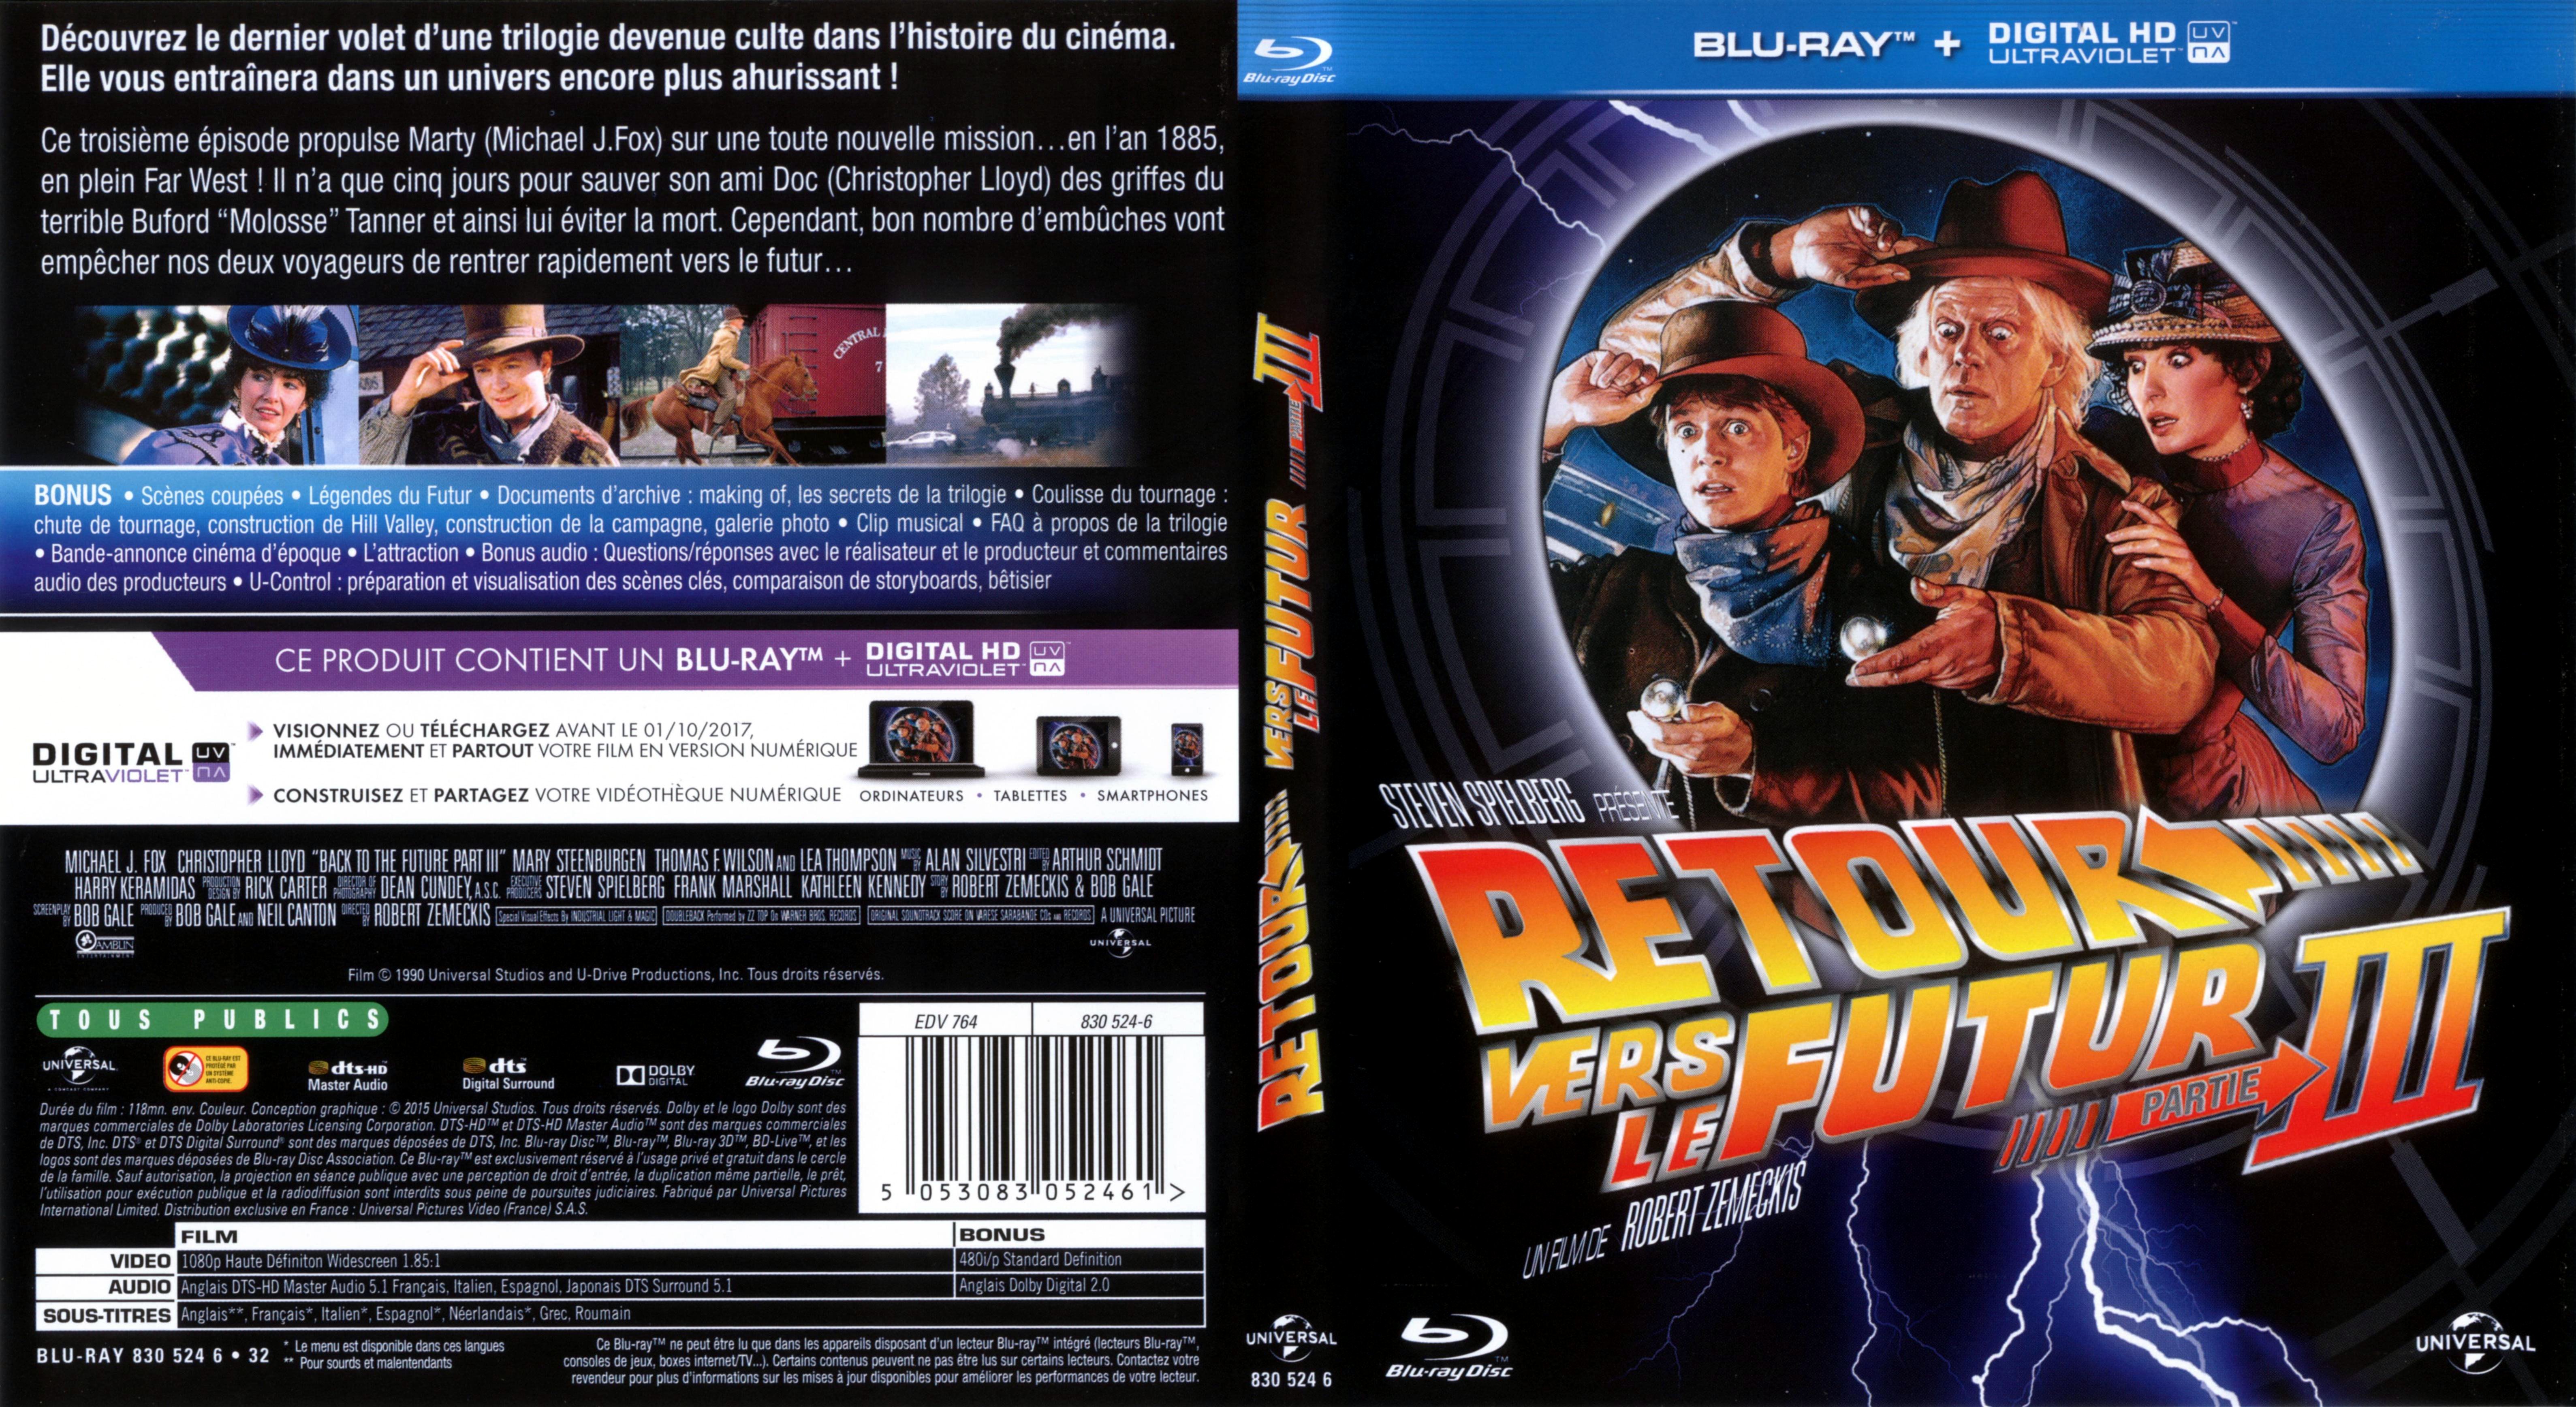 Jaquette DVD Retour vers le futur 3 (BLU-RAY) v3